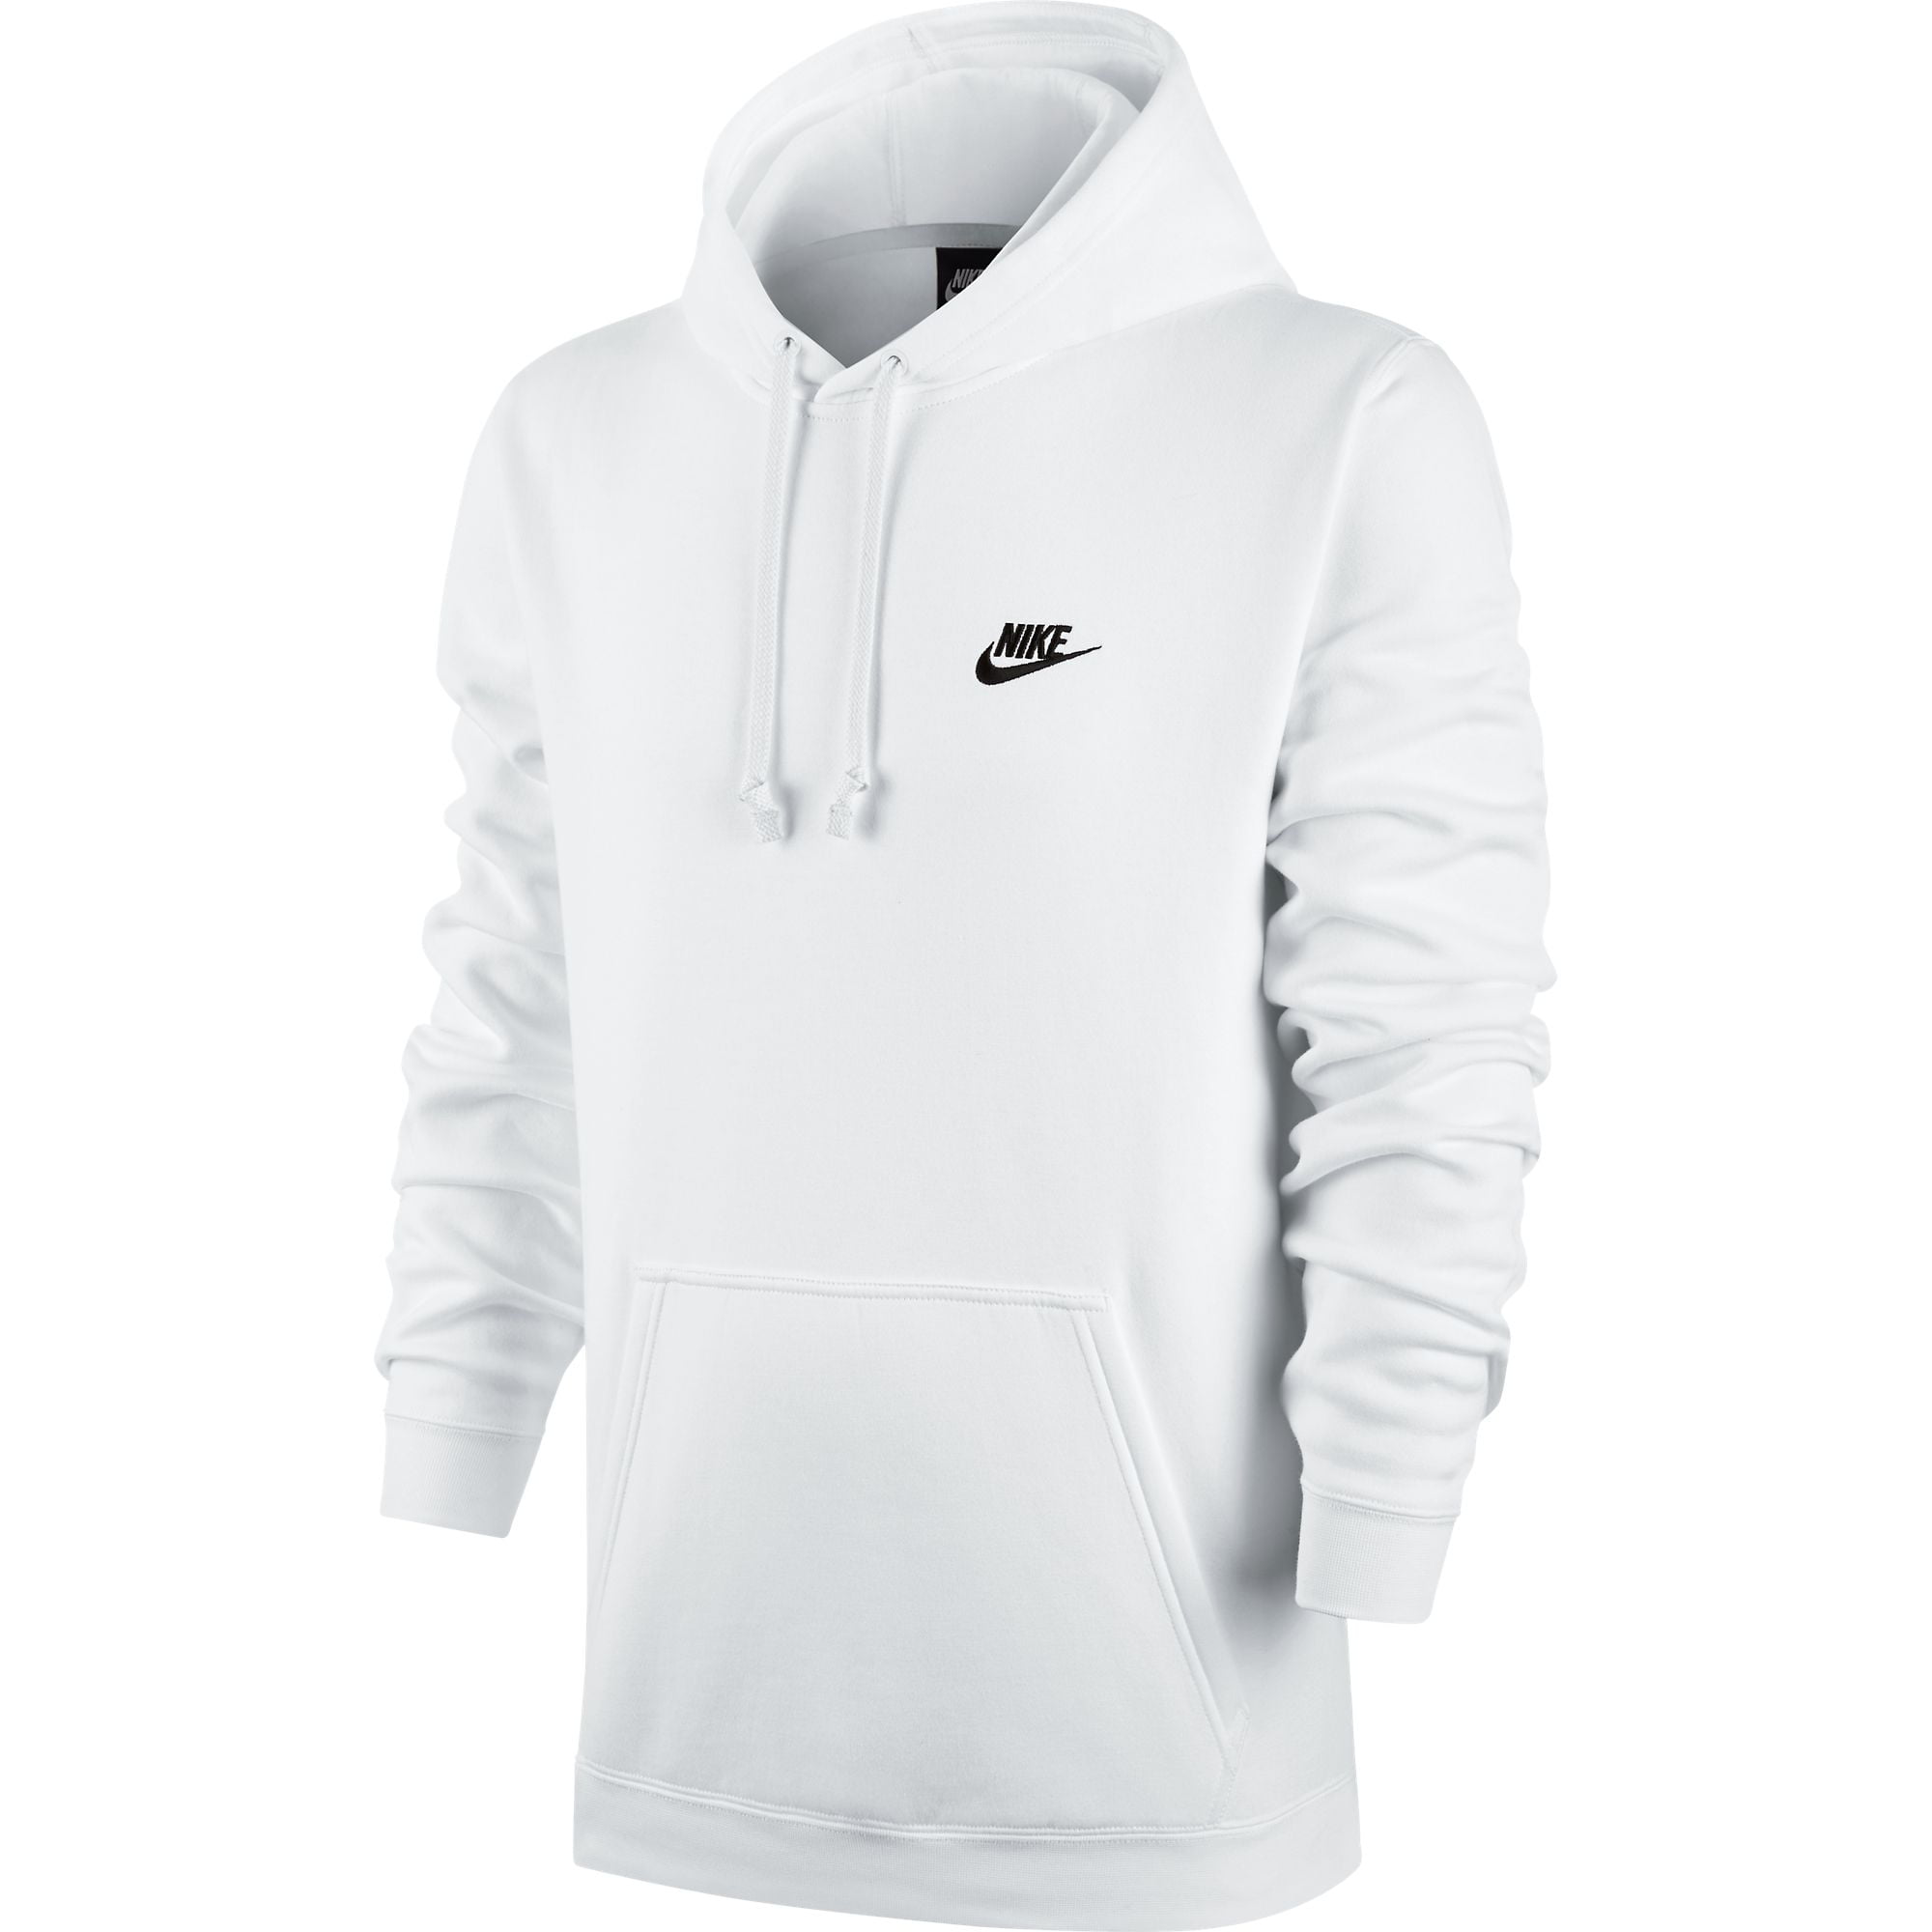 Club Nike Sportswear Pullover White-Black NSW 804346-100 Hoodie Swoosh